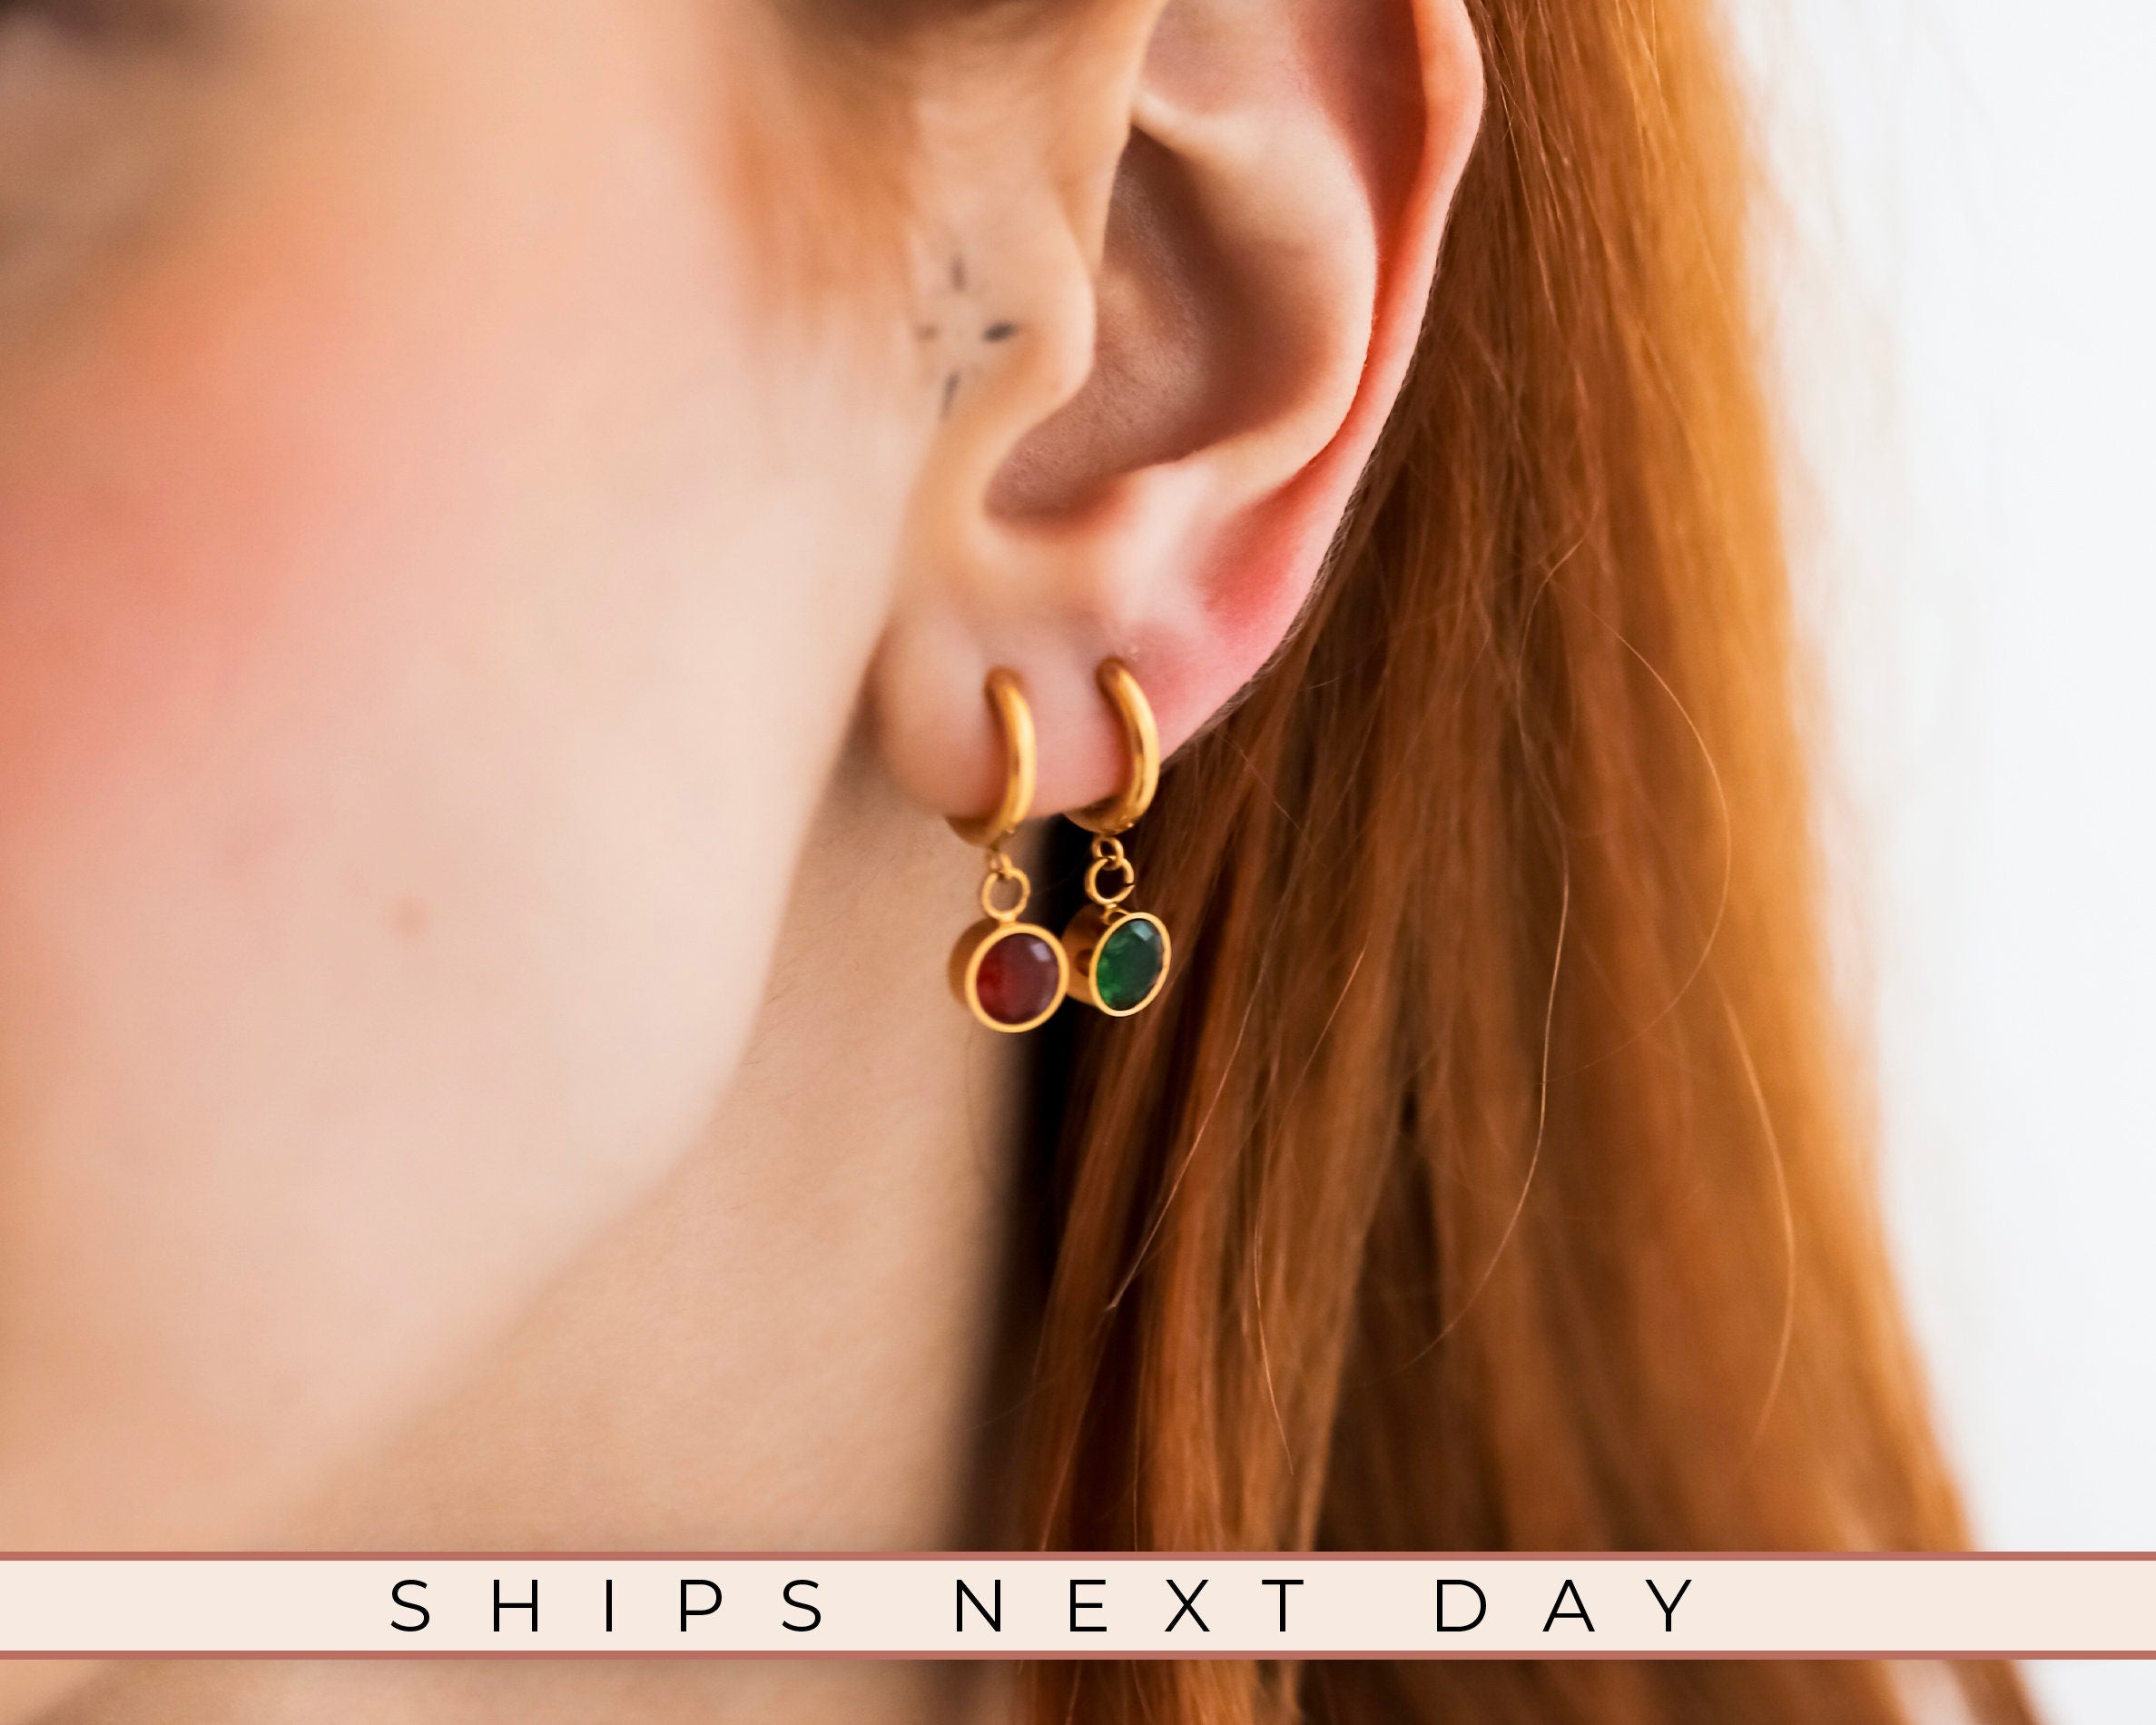 Cate & Chloe Madison 18k White Gold Hoop Earrings with Swarovski Crystals,  Crystal Hoop Earrings for Women, Wedding Anniversary Birthday Jewelry Gift  